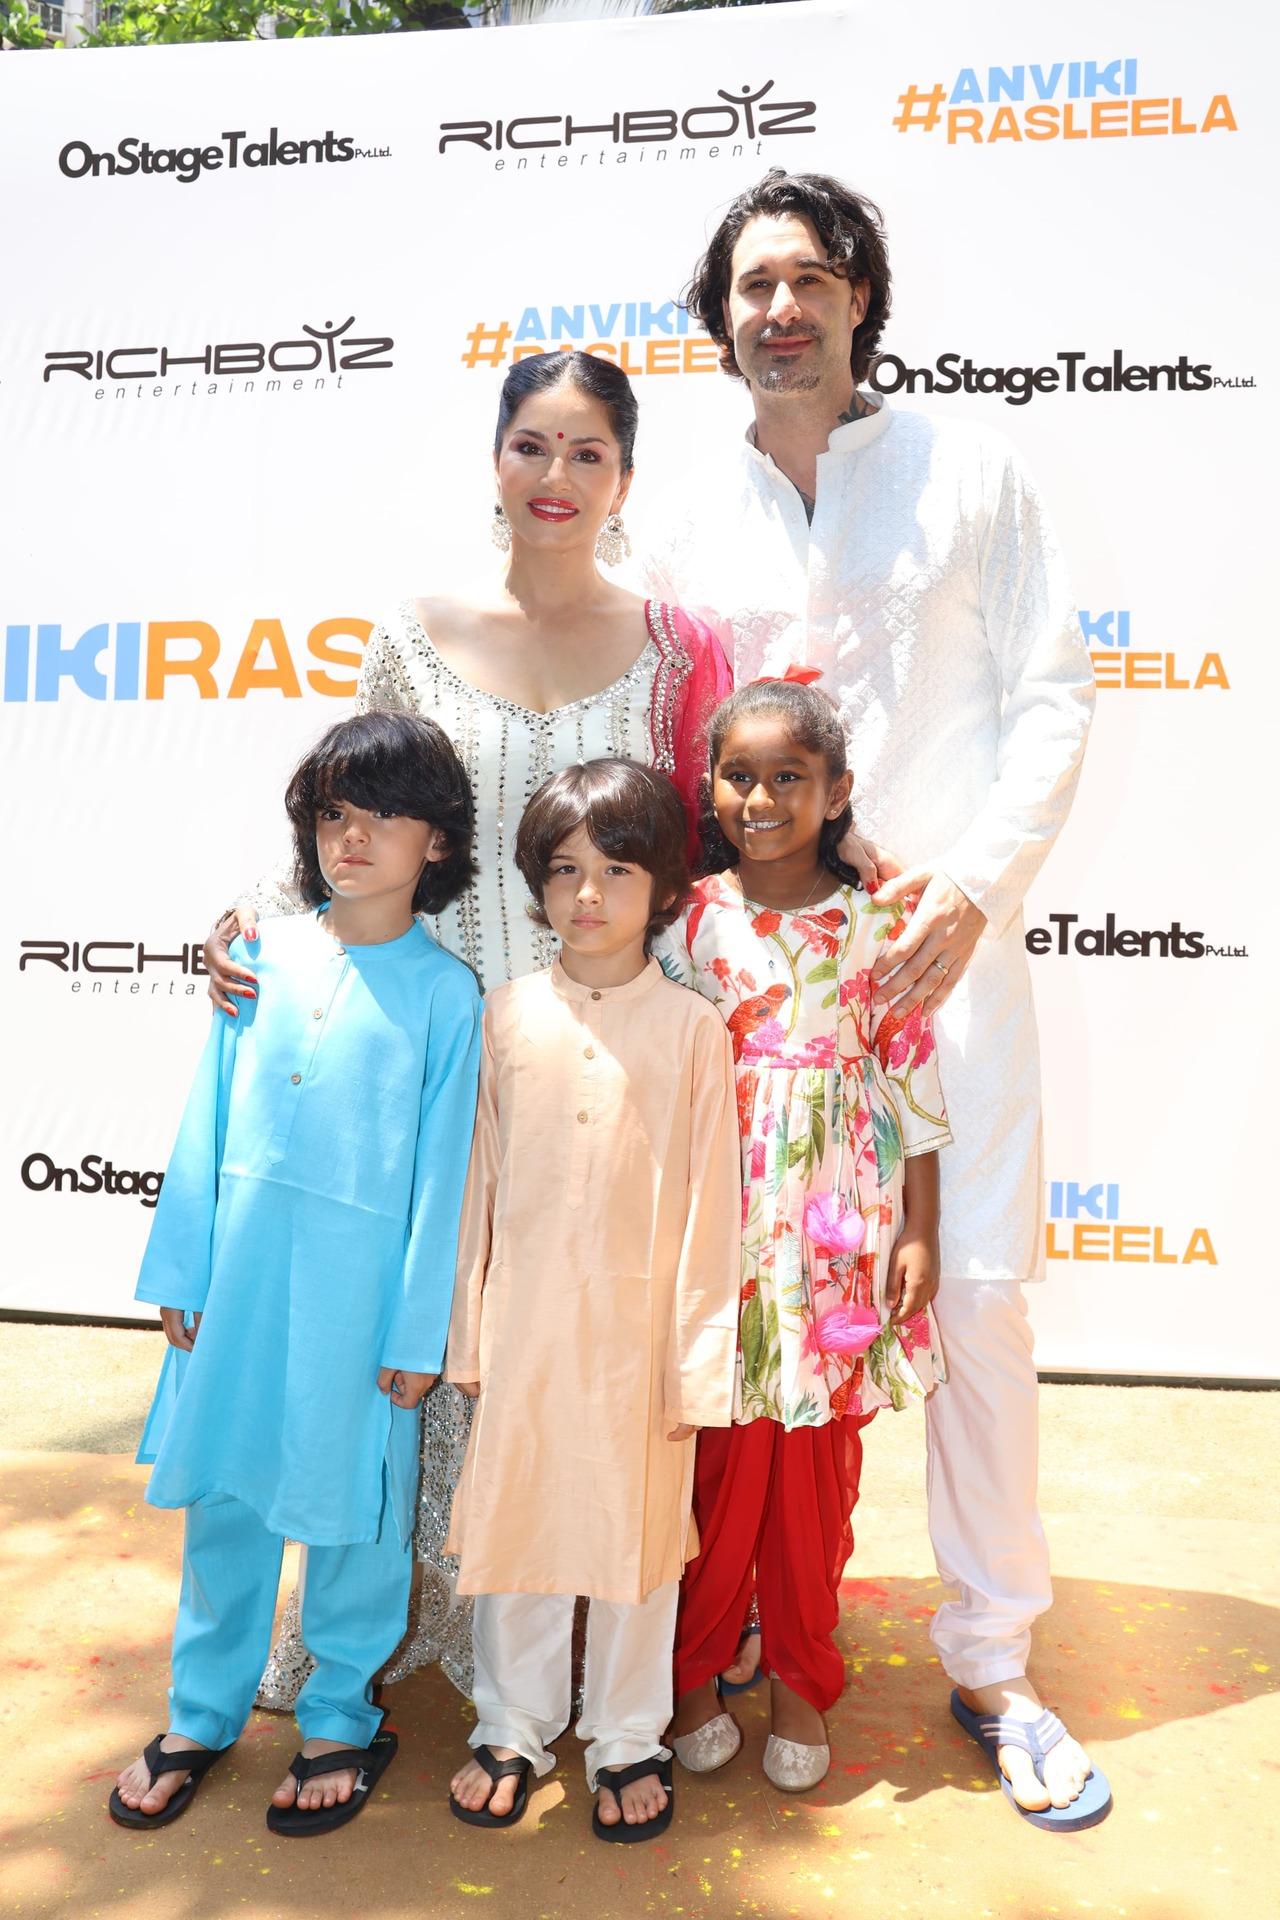 Sunny Leone arrived with her husband Daniel Weber and kids - Asher, Noah, and Nisha. 